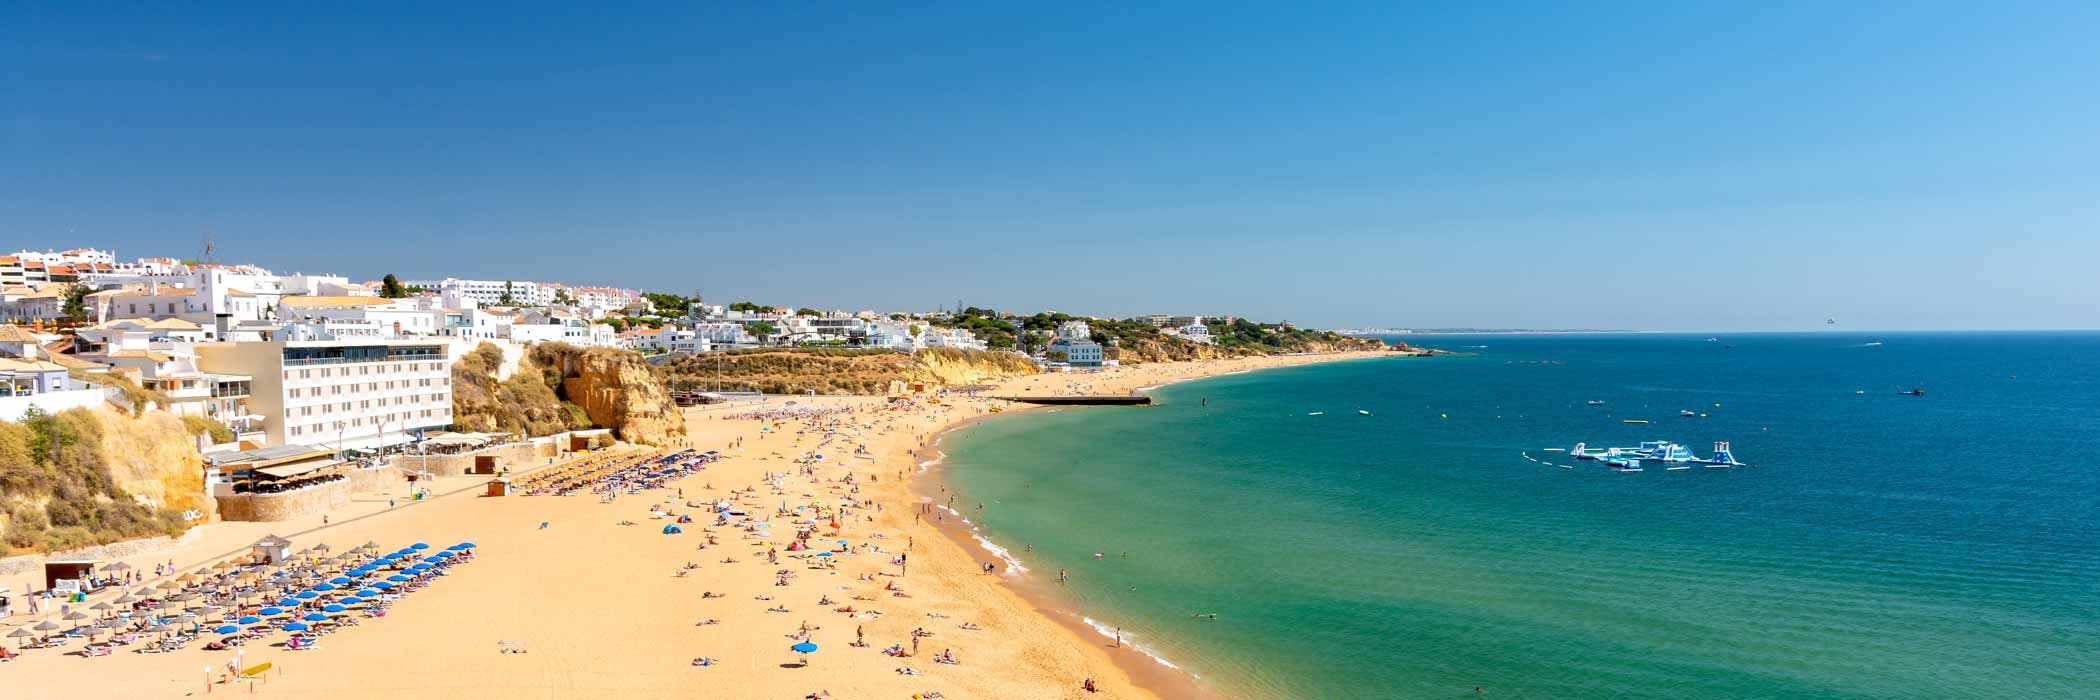 Albufeira Beach - Hotels in the Algarve